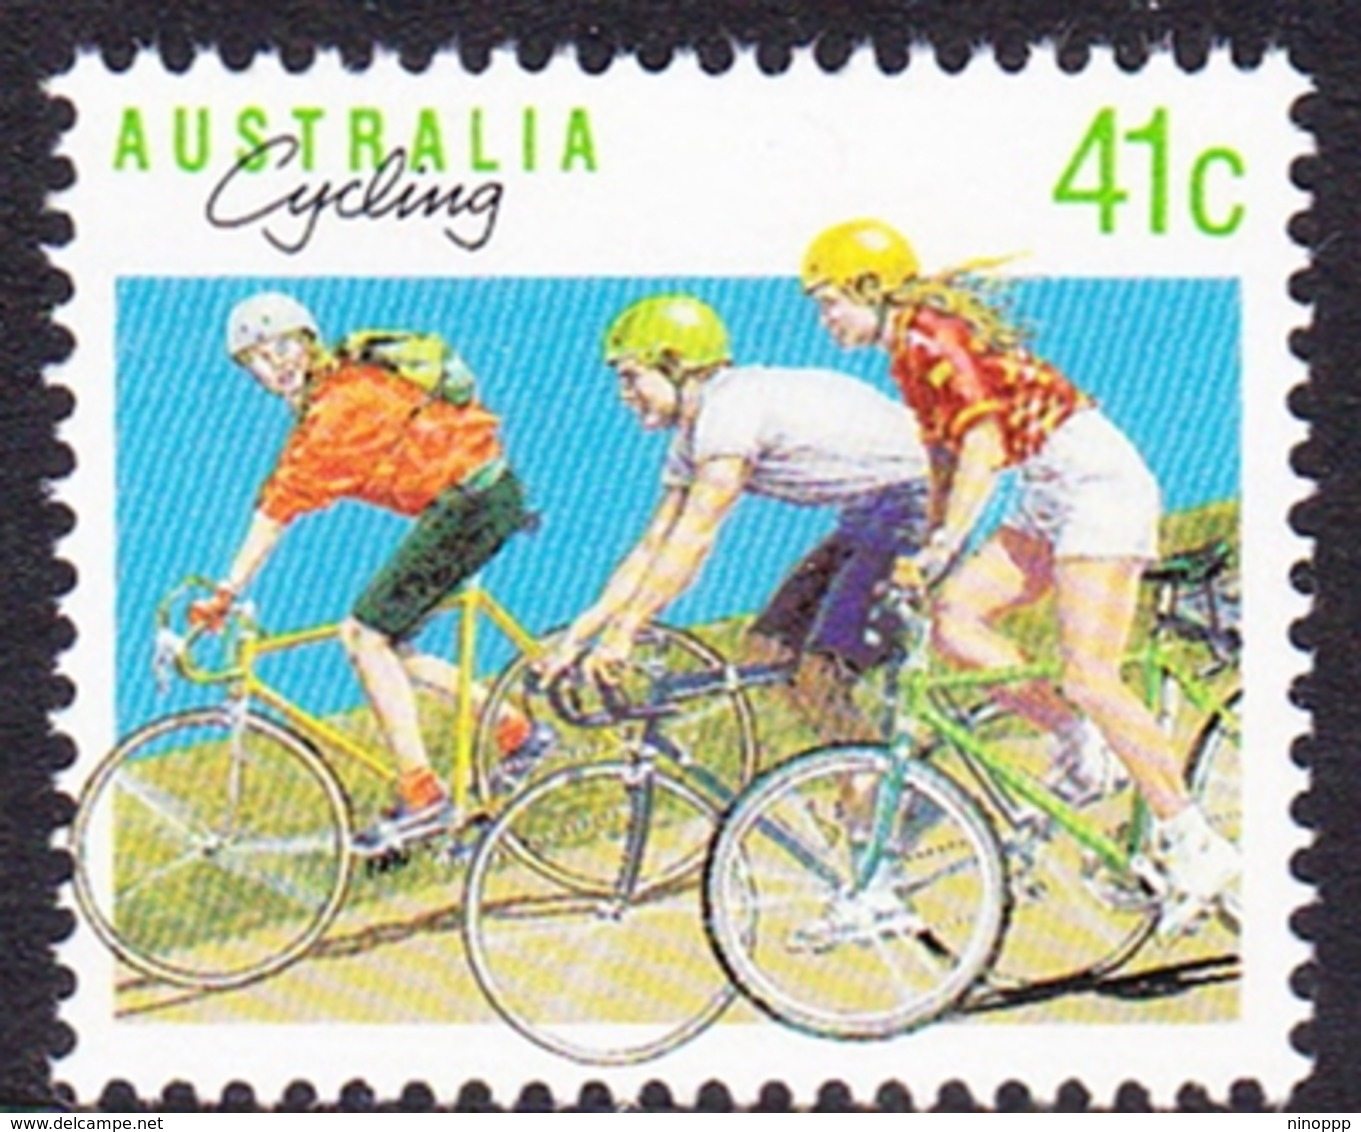 Australia ASC 1208 1989 Sports Series II 41c Cycling, Mint Never Hinged - Mint Stamps